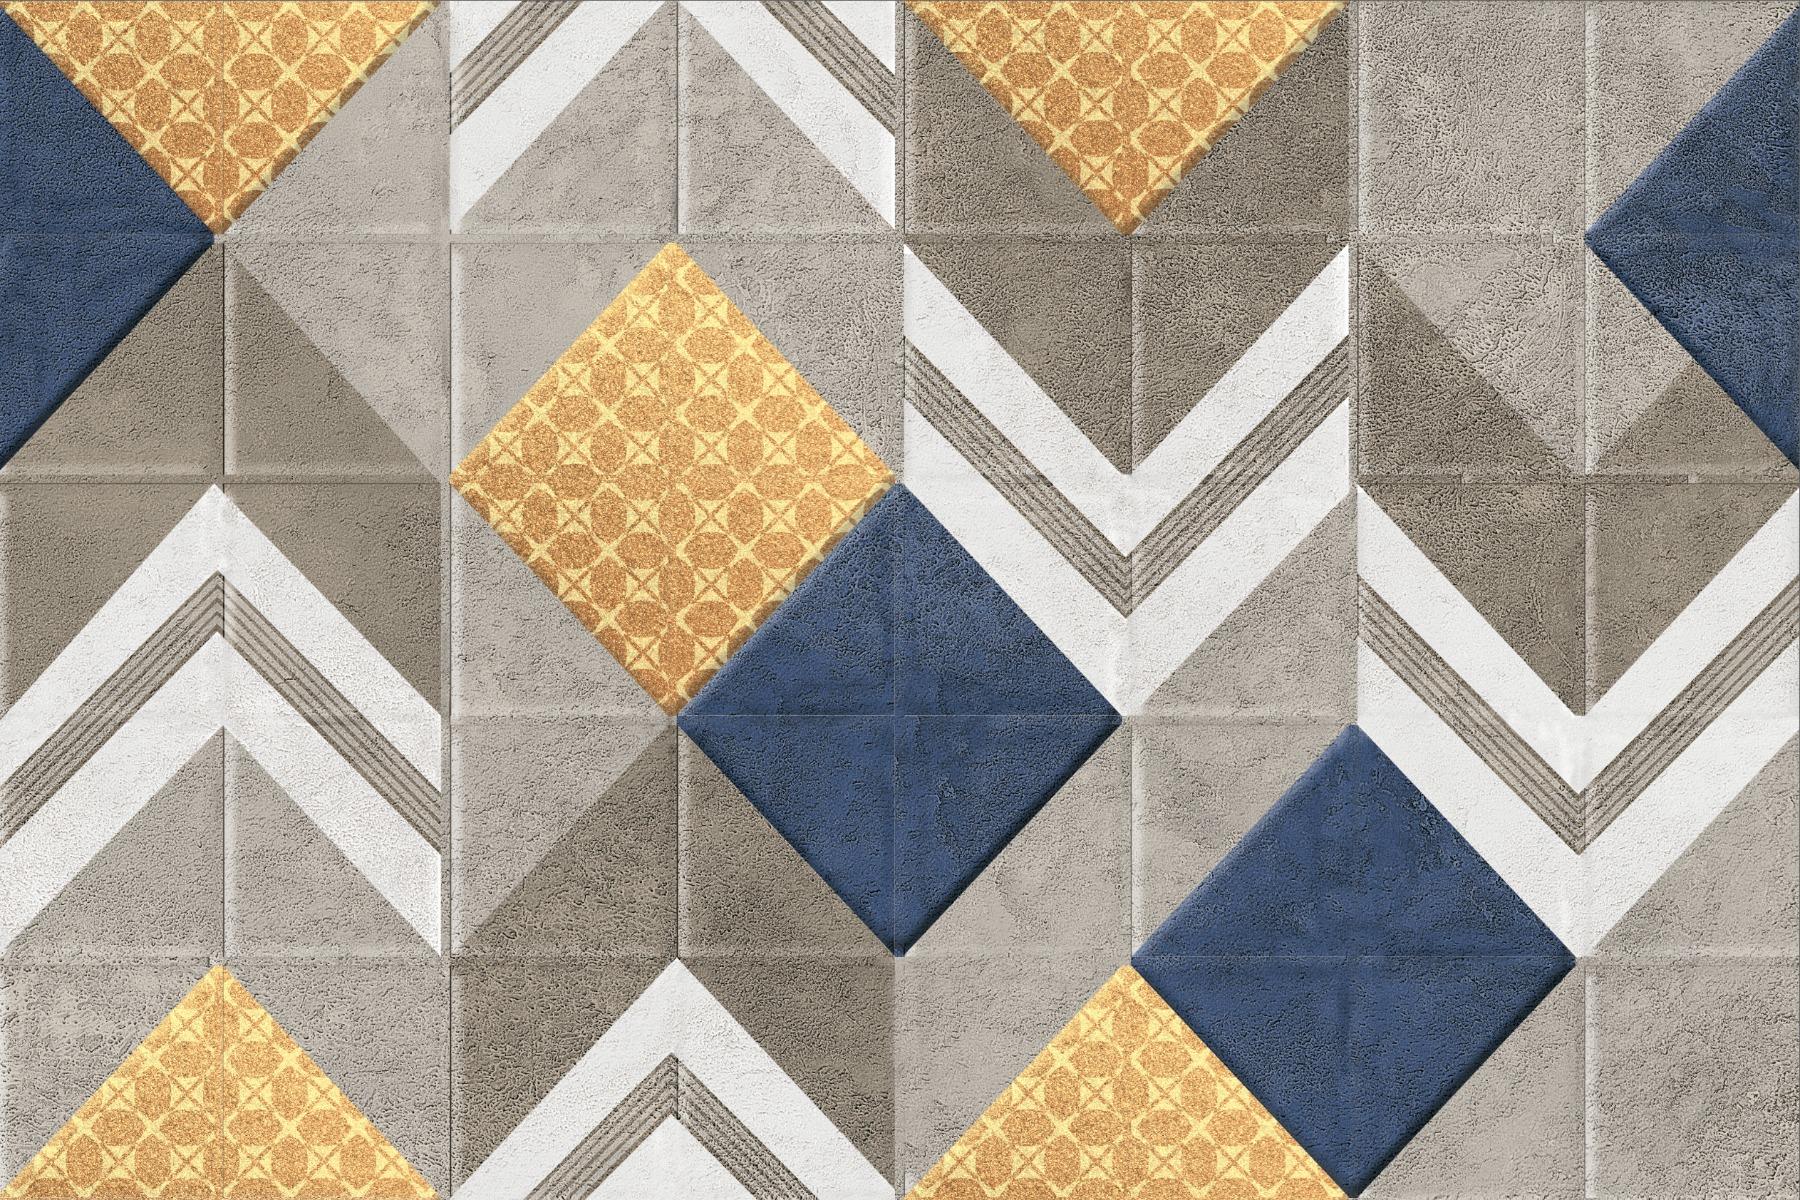 Wall Tiles for Bathroom Tiles, Kitchen Tiles, Accent Tiles, Dining Room Tiles